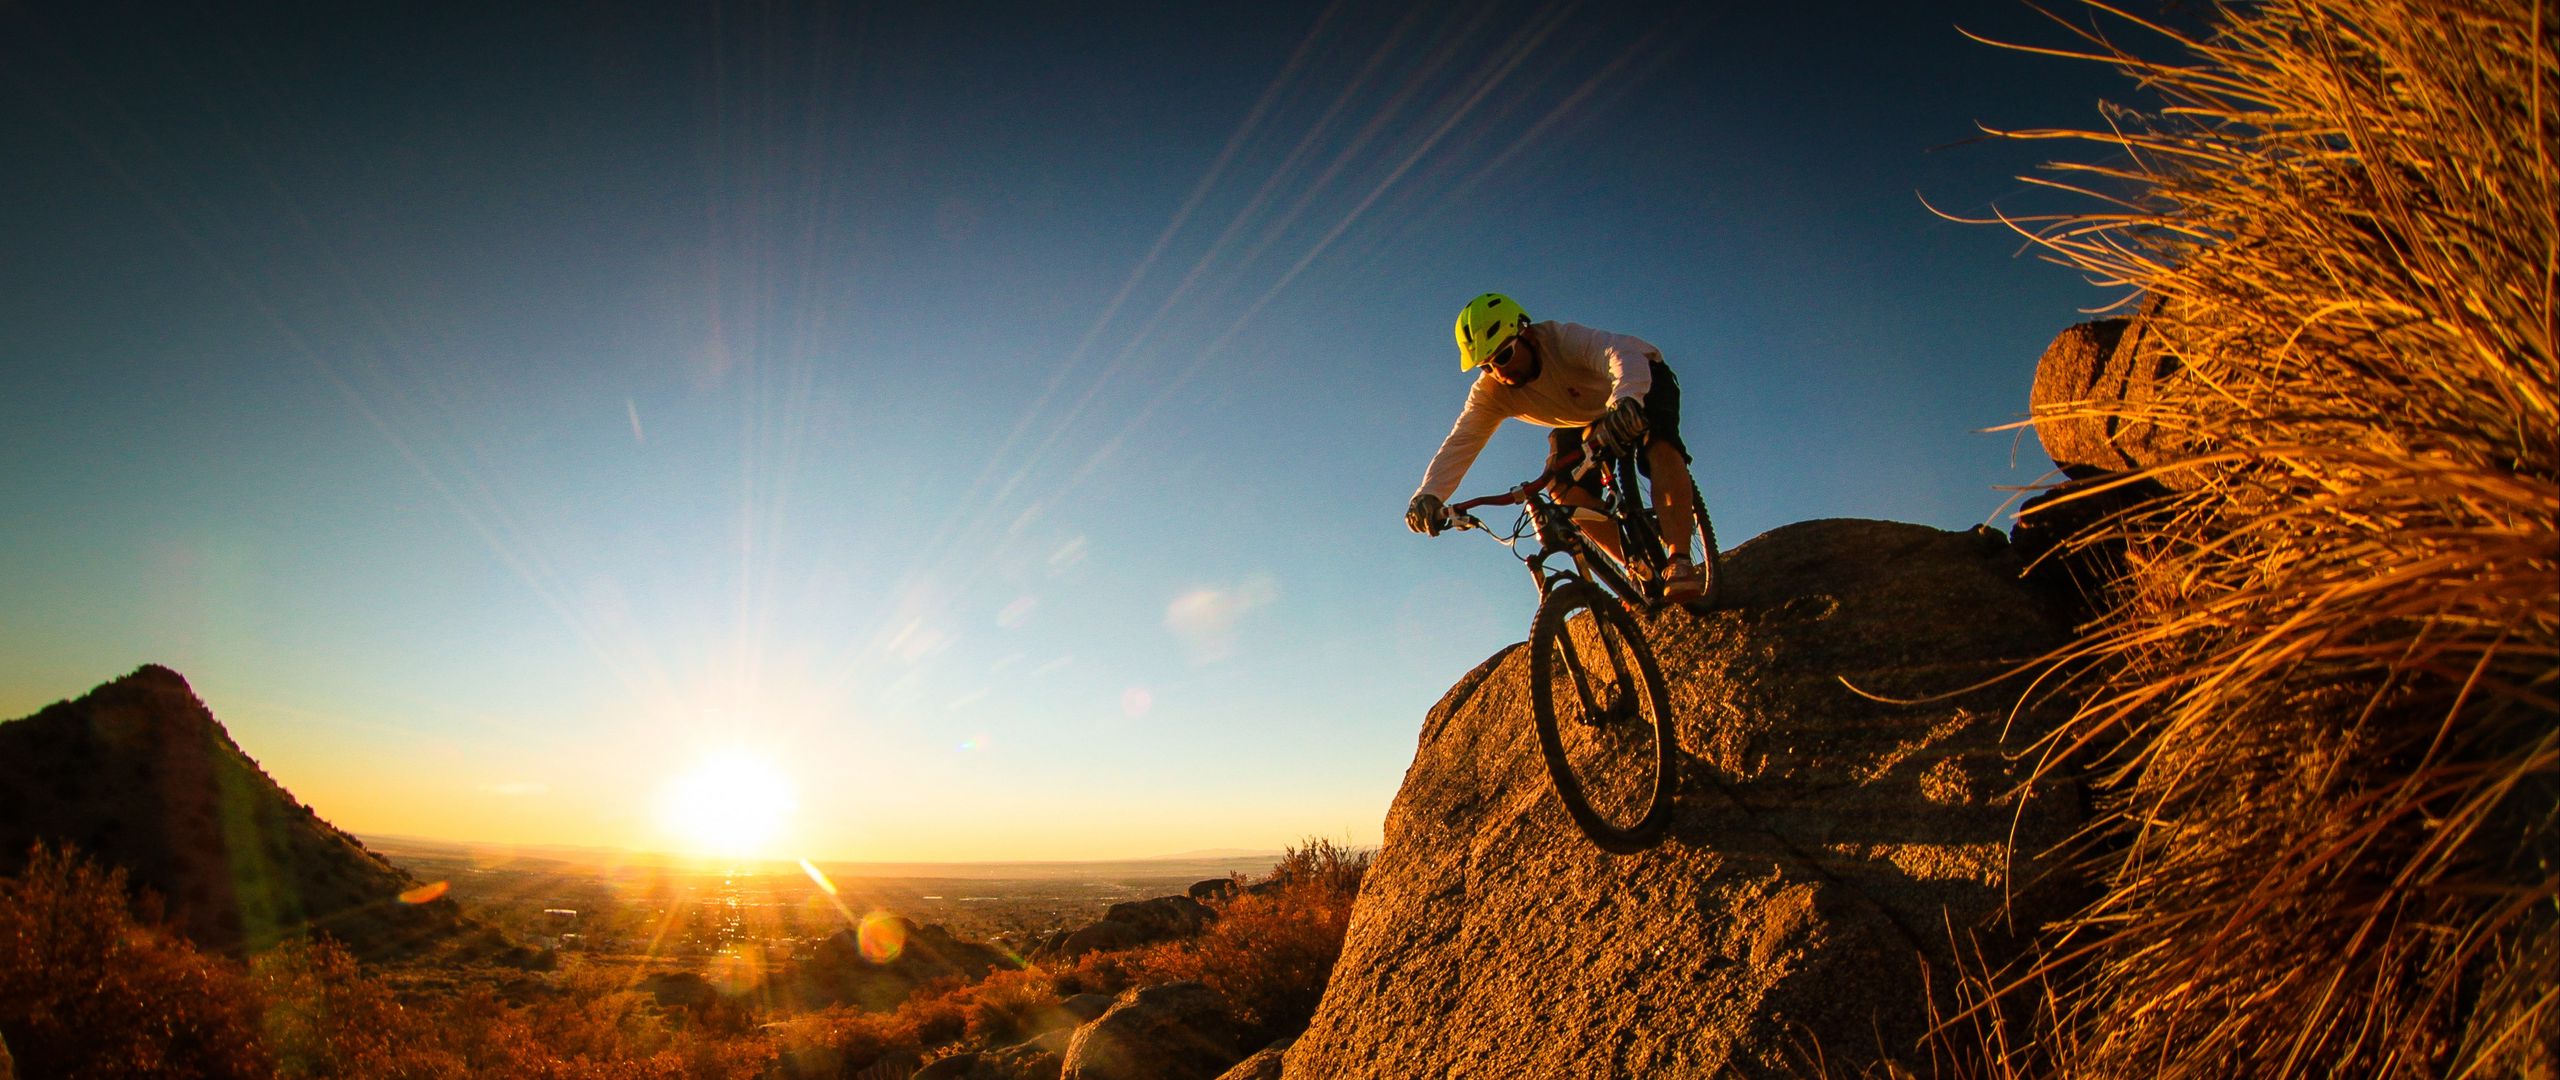 Download wallpaper 2560x1080 mountain bike, cyclist, man dual wide 1080p hd  background